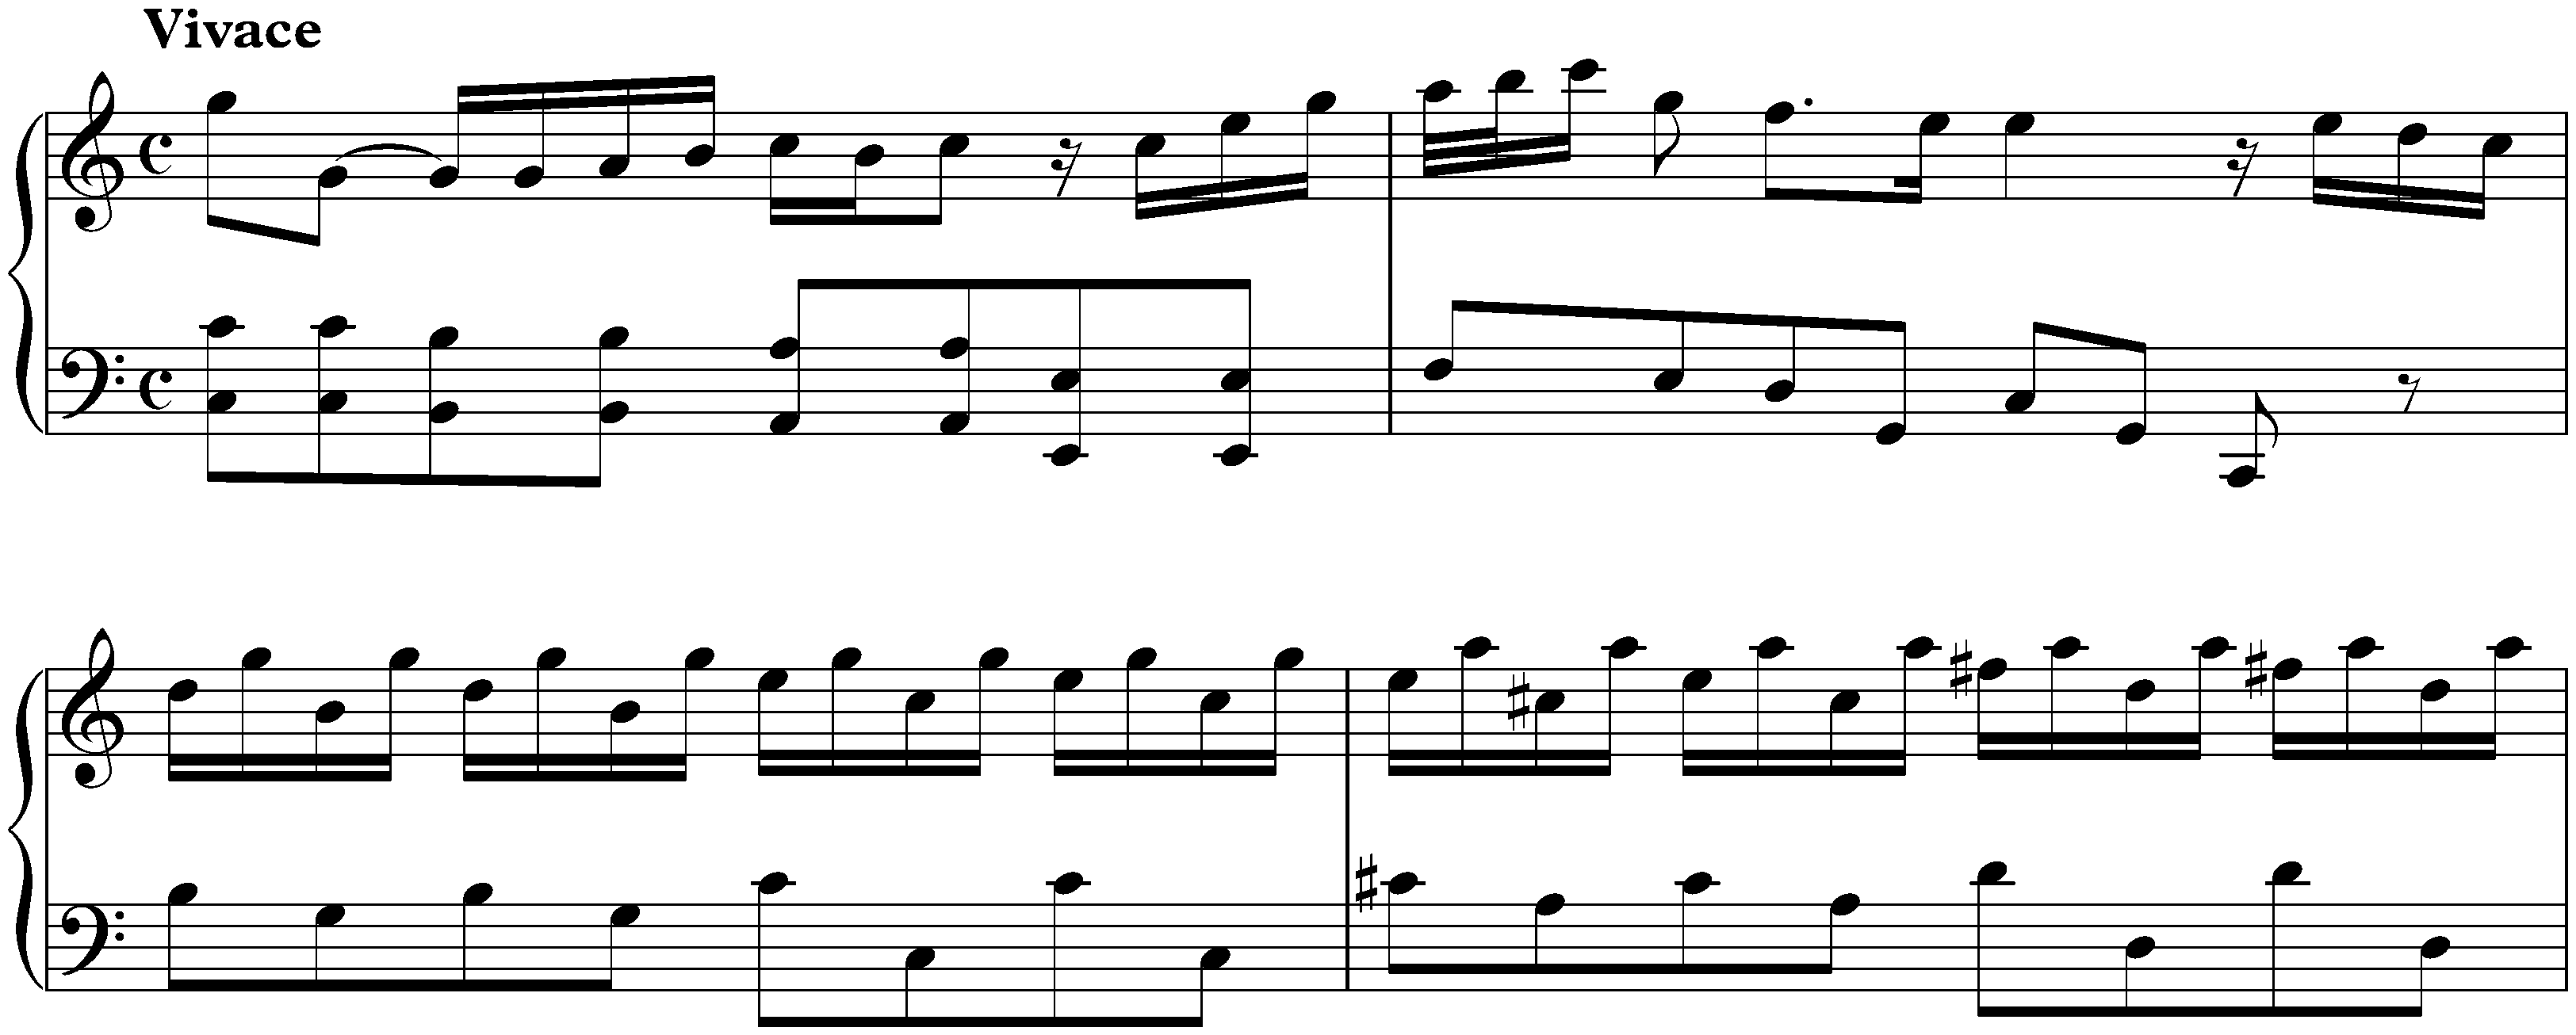 Concerto in C major, BWV Anh. 151; 4. Aria: Vivace